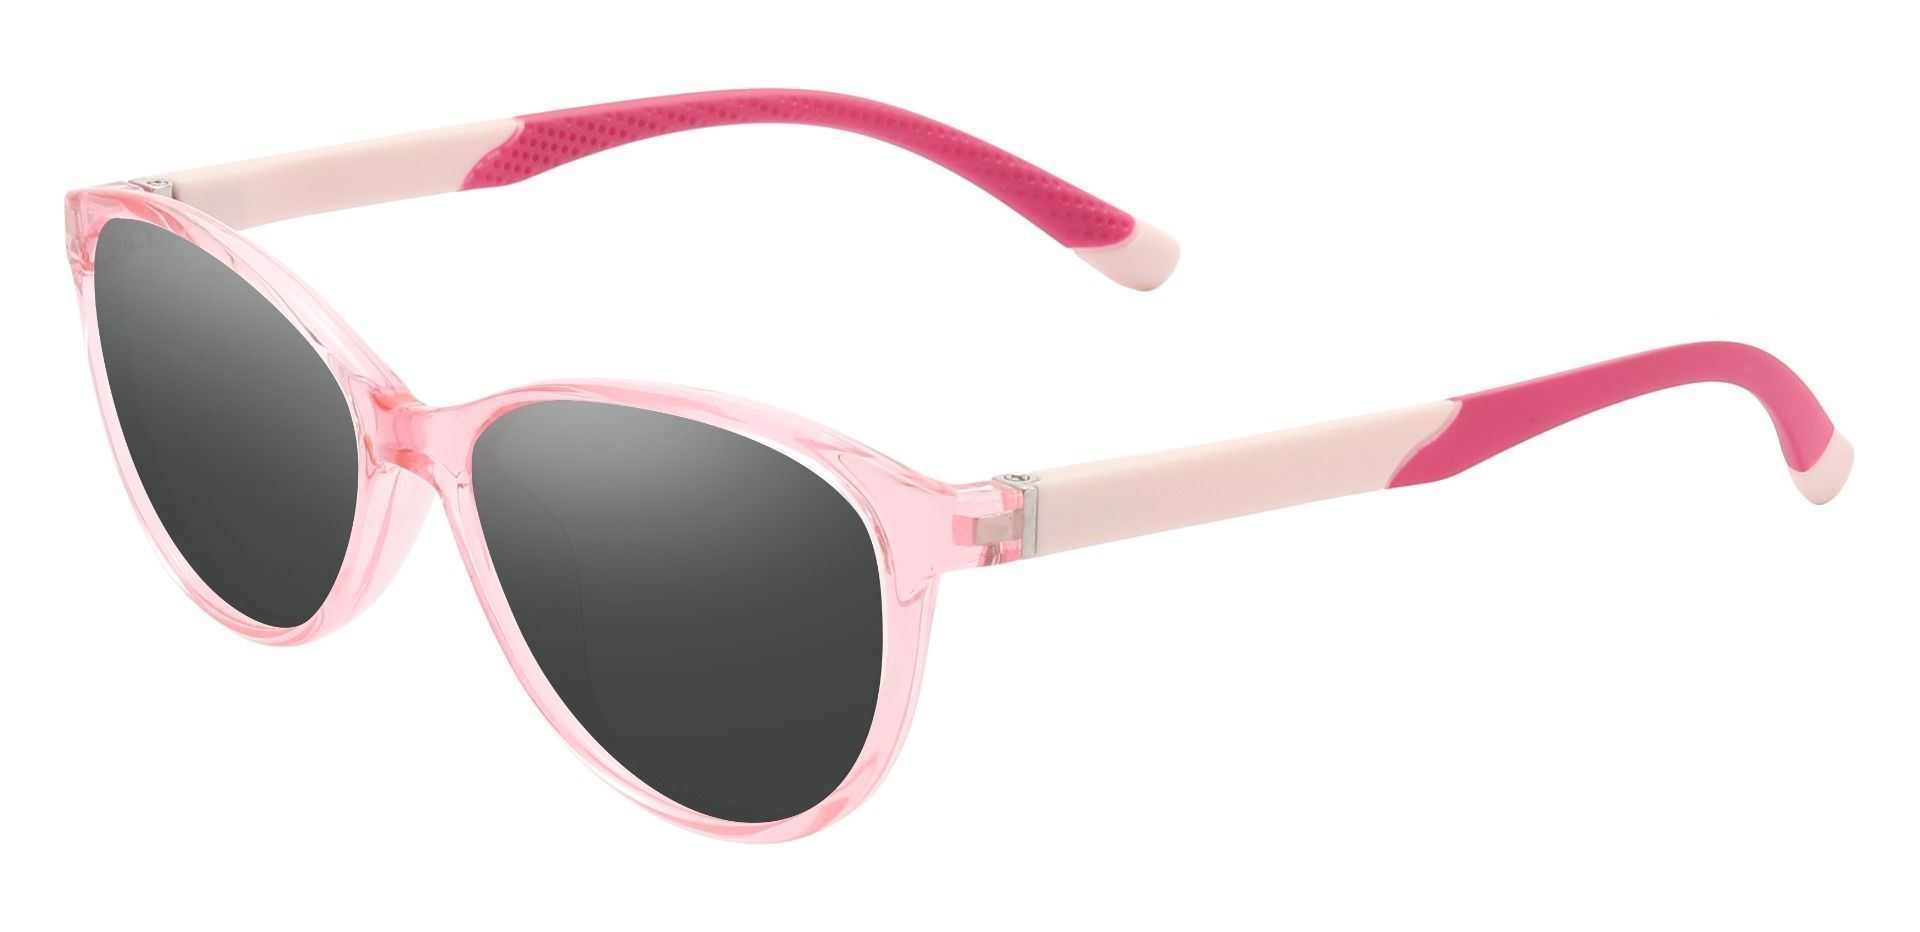 Mildred Cat Eye Prescription Sunglasses - Pink Frame With Gray Lenses